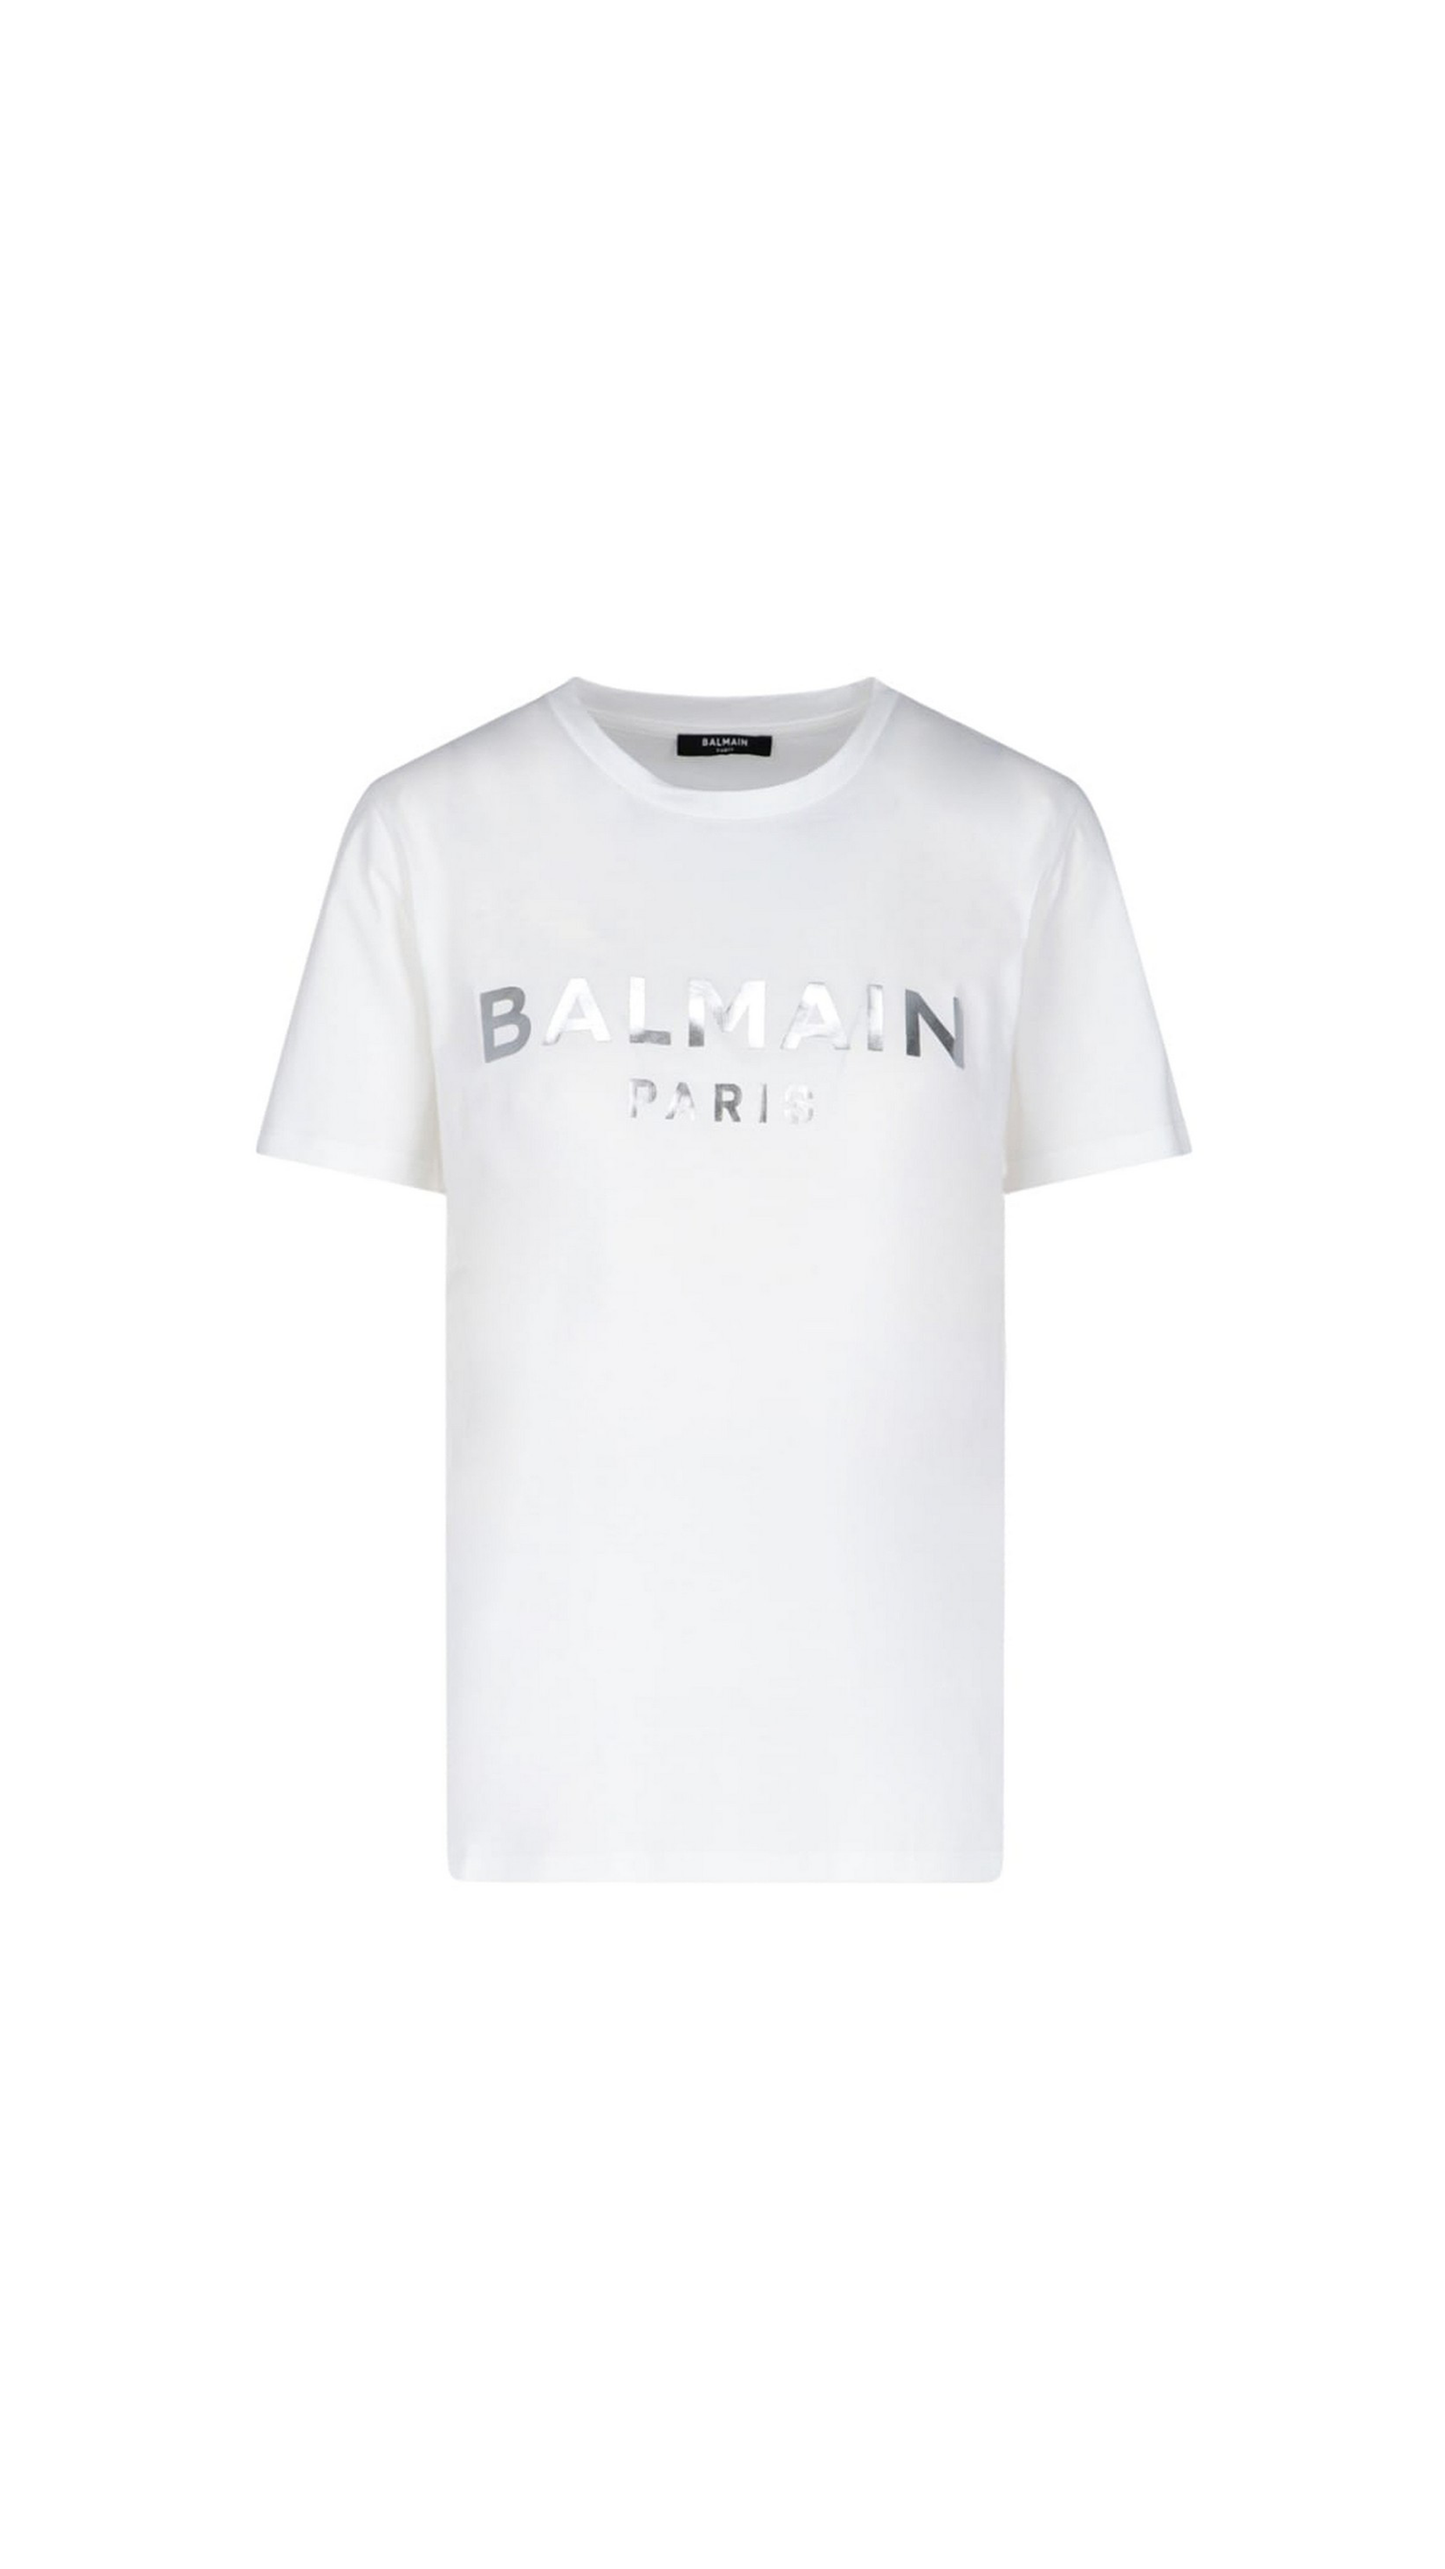 Eco-designed cotton T-shirt with Balmain logo print - White/Sliver